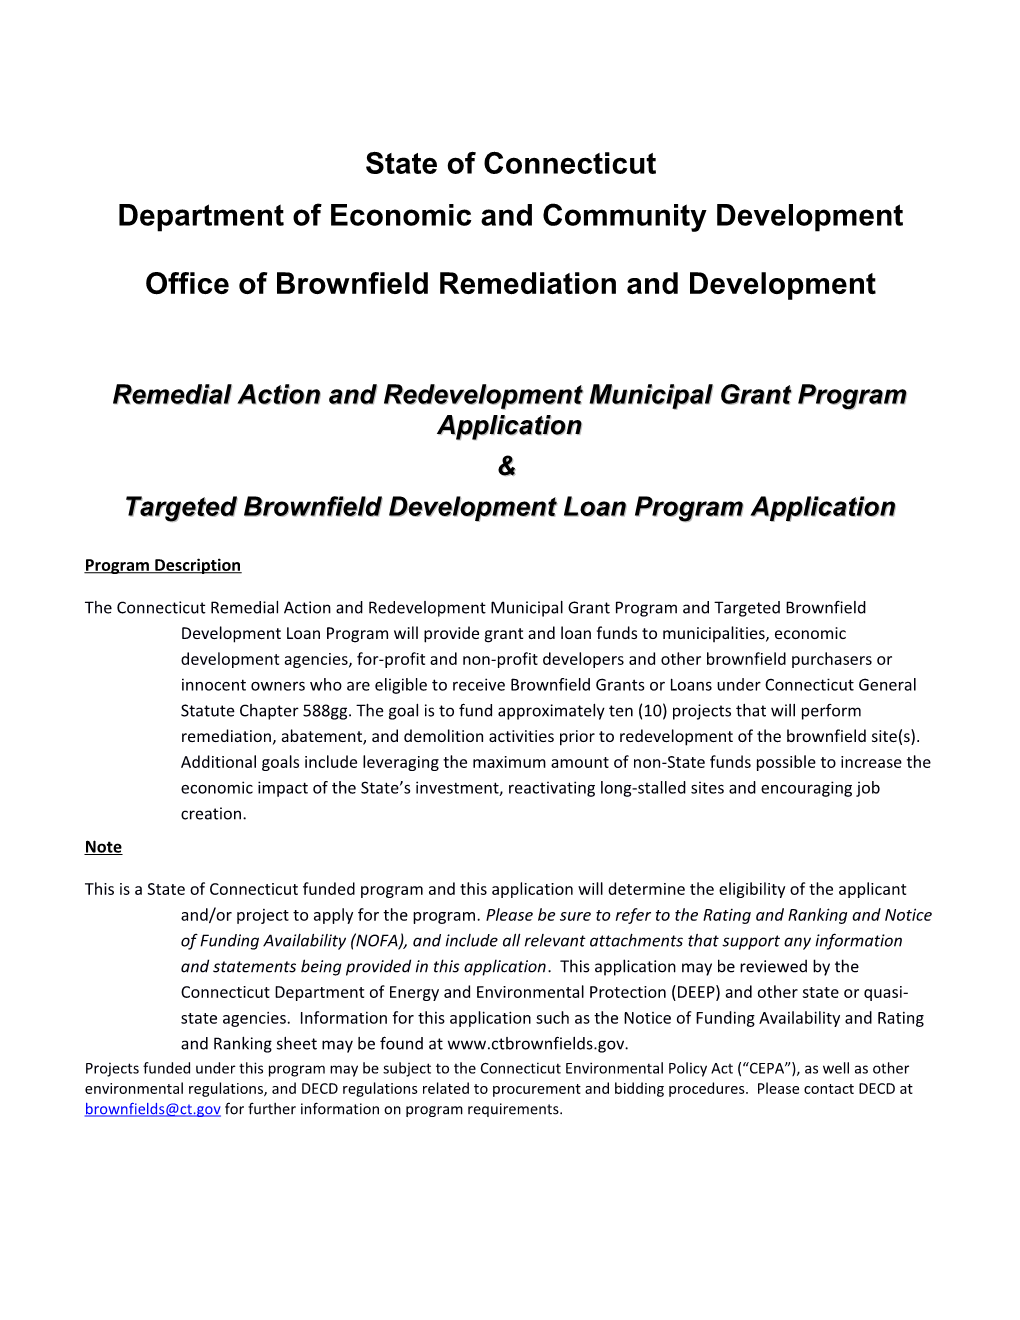 Department of Economic and Community Development s1